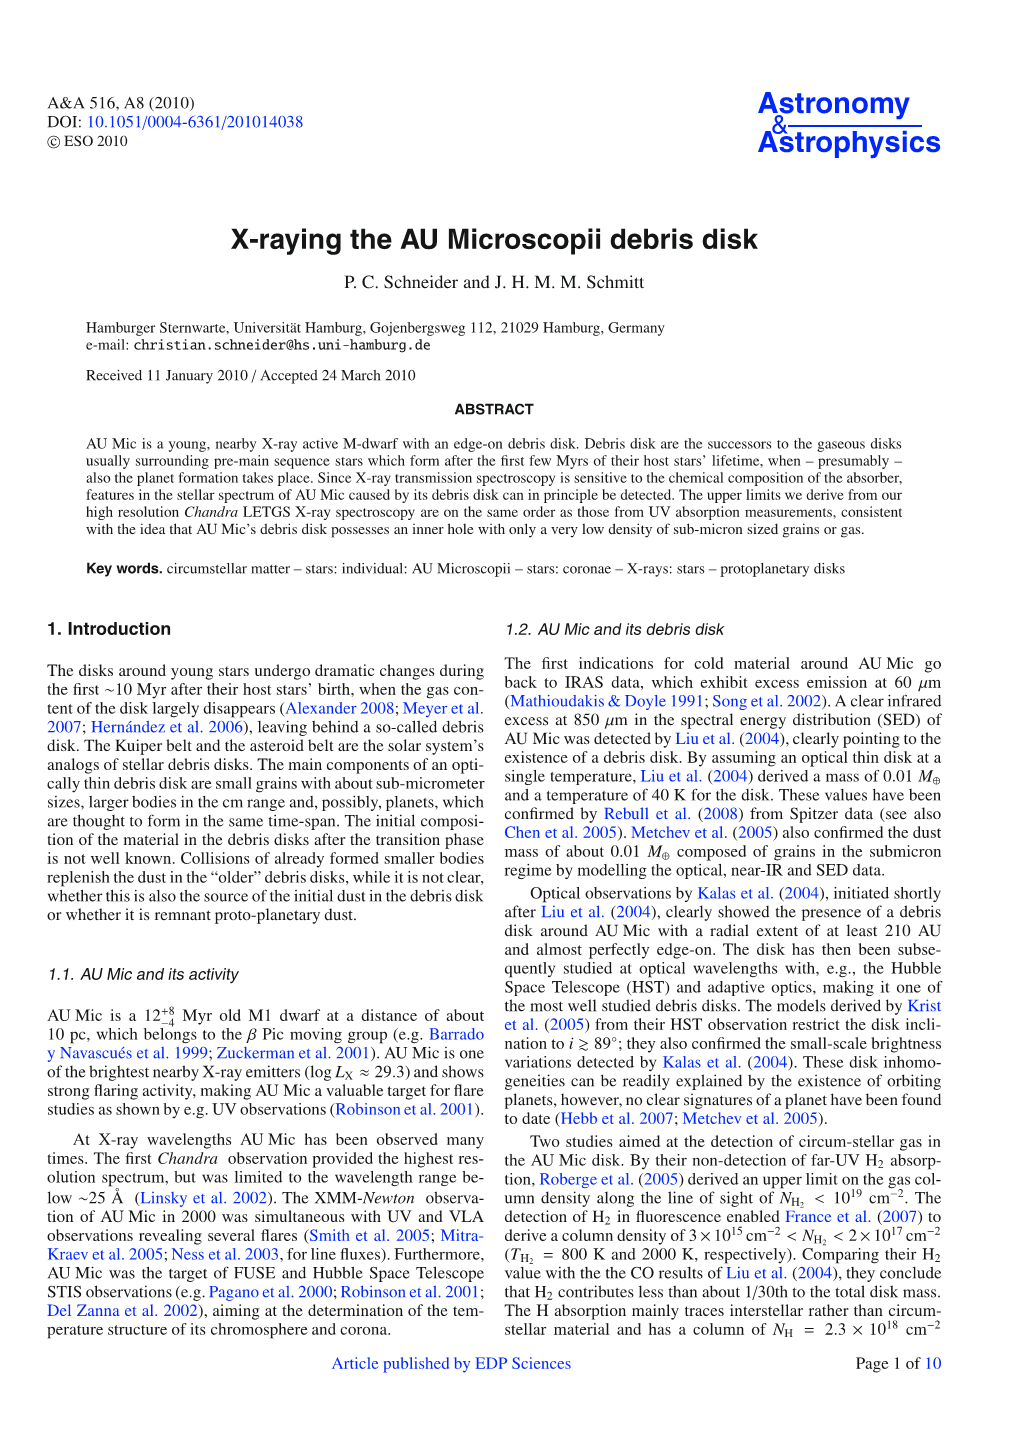 X-Raying the AU Microscopii Debris Disk